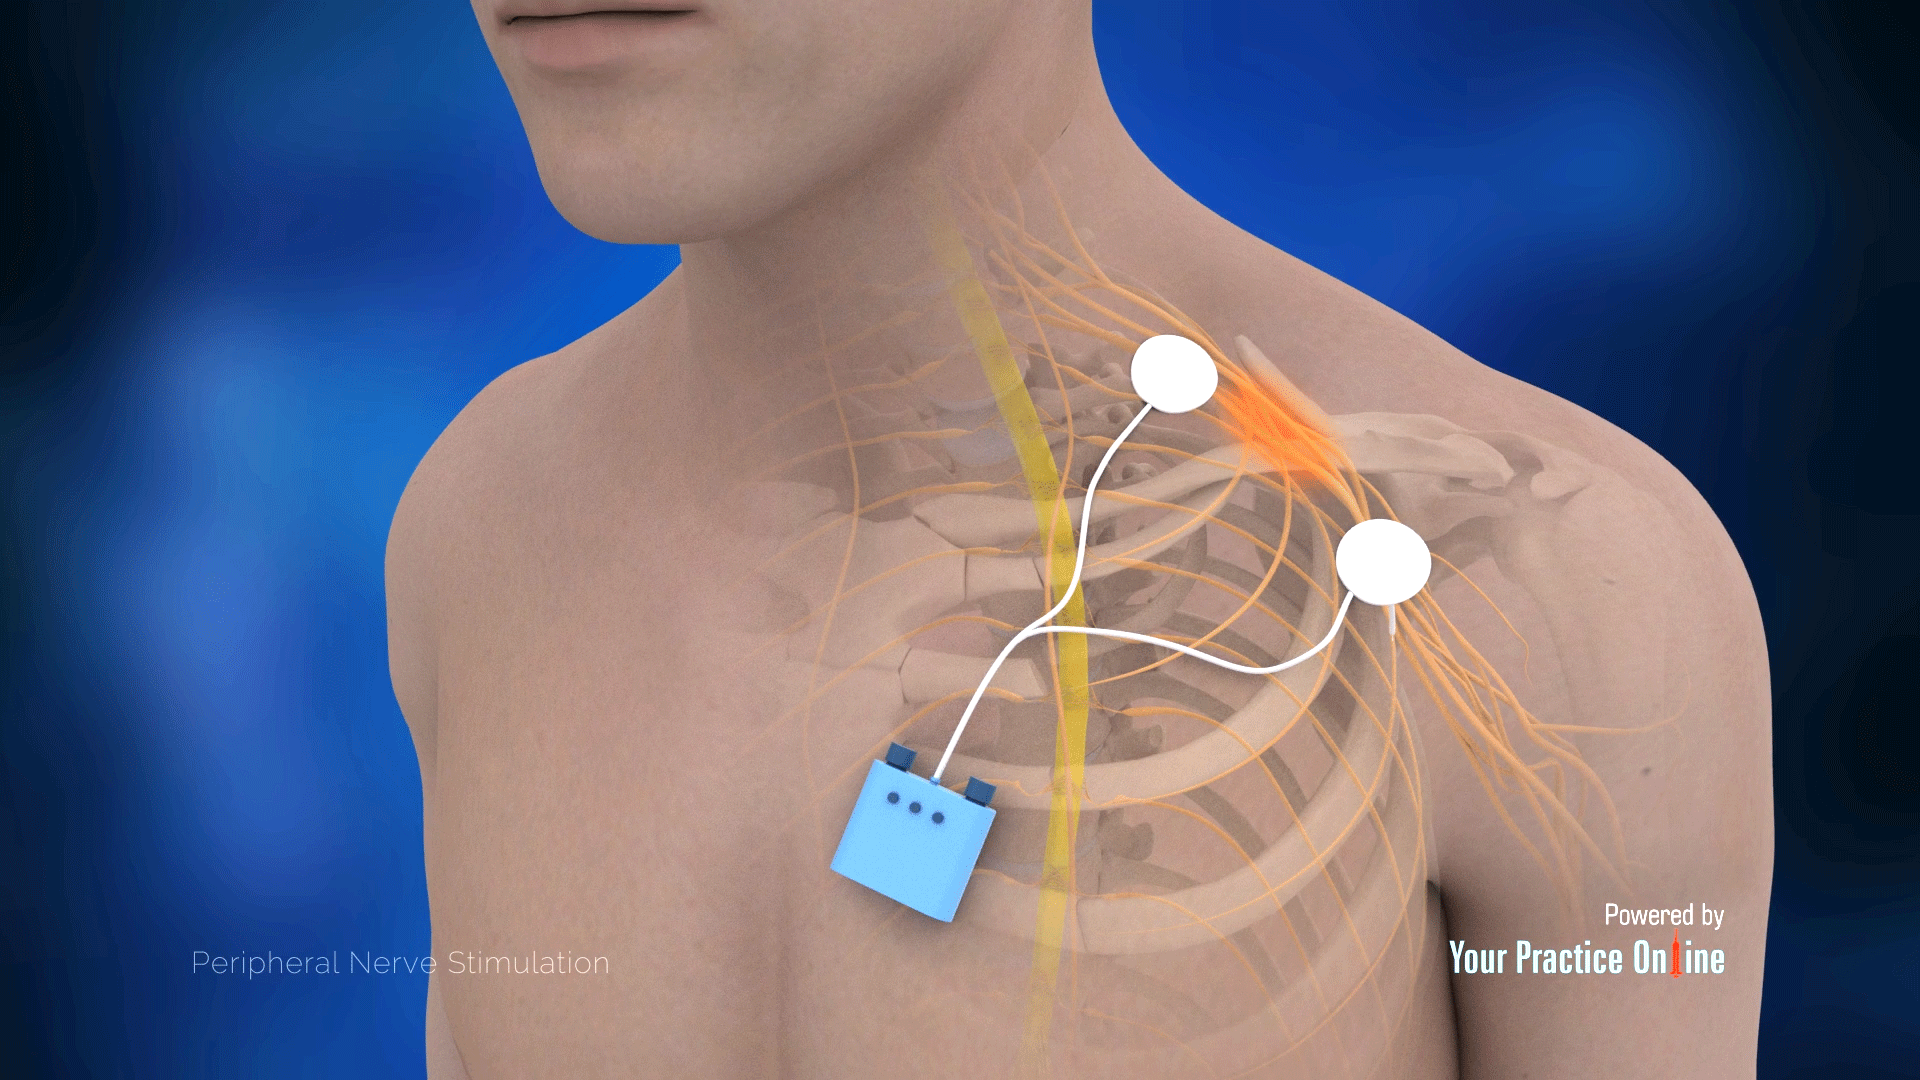 a peripheral nerve or dorsal column stimulator